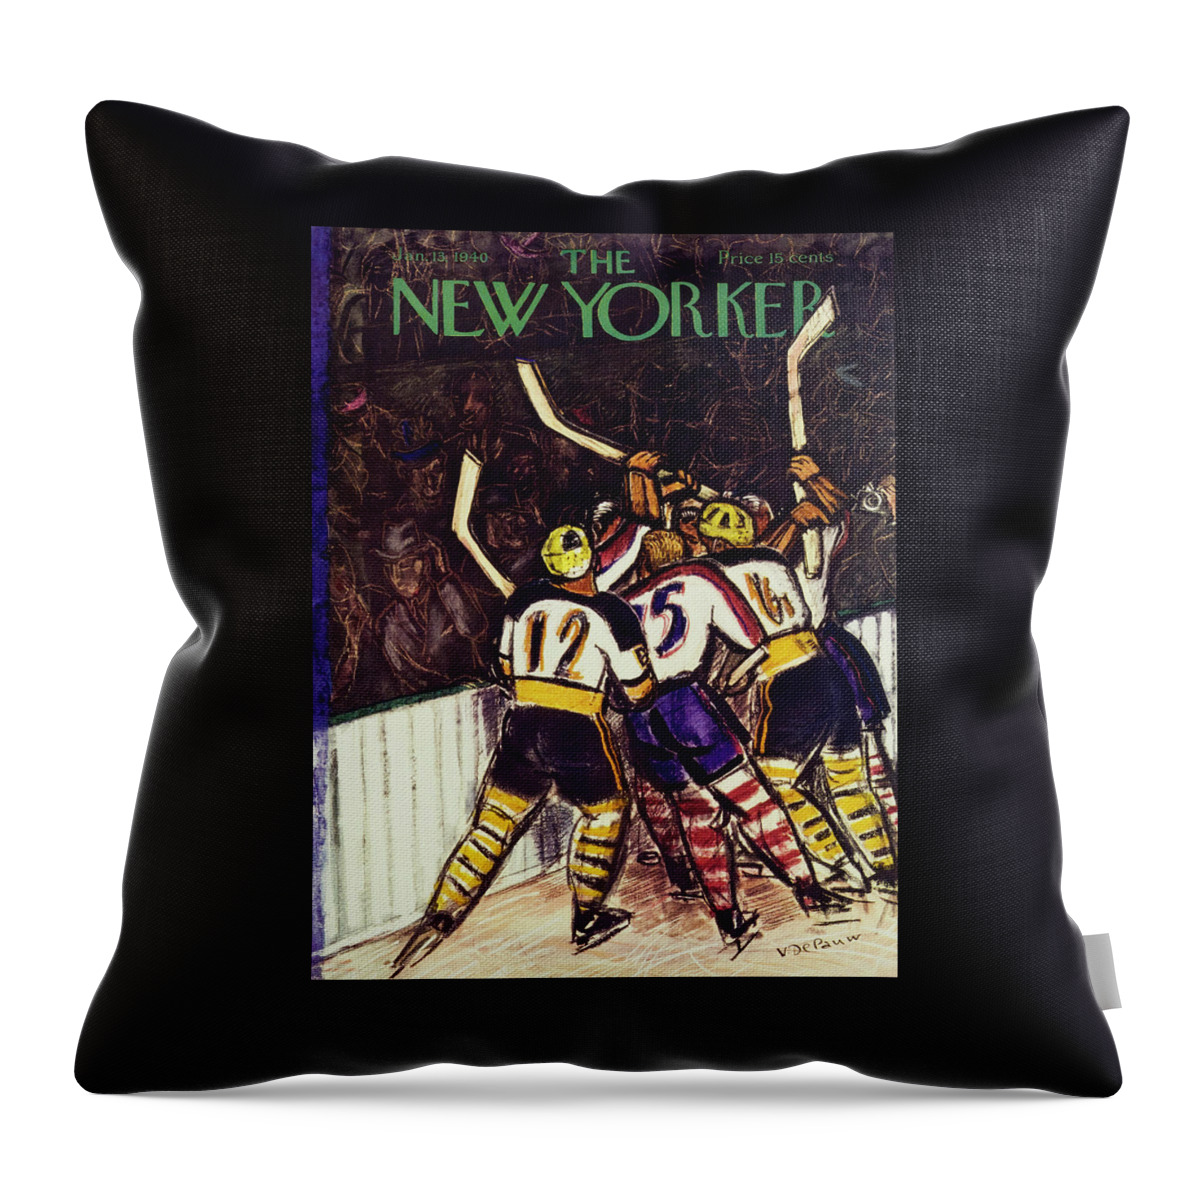 New Yorker January 13 1940 Throw Pillow